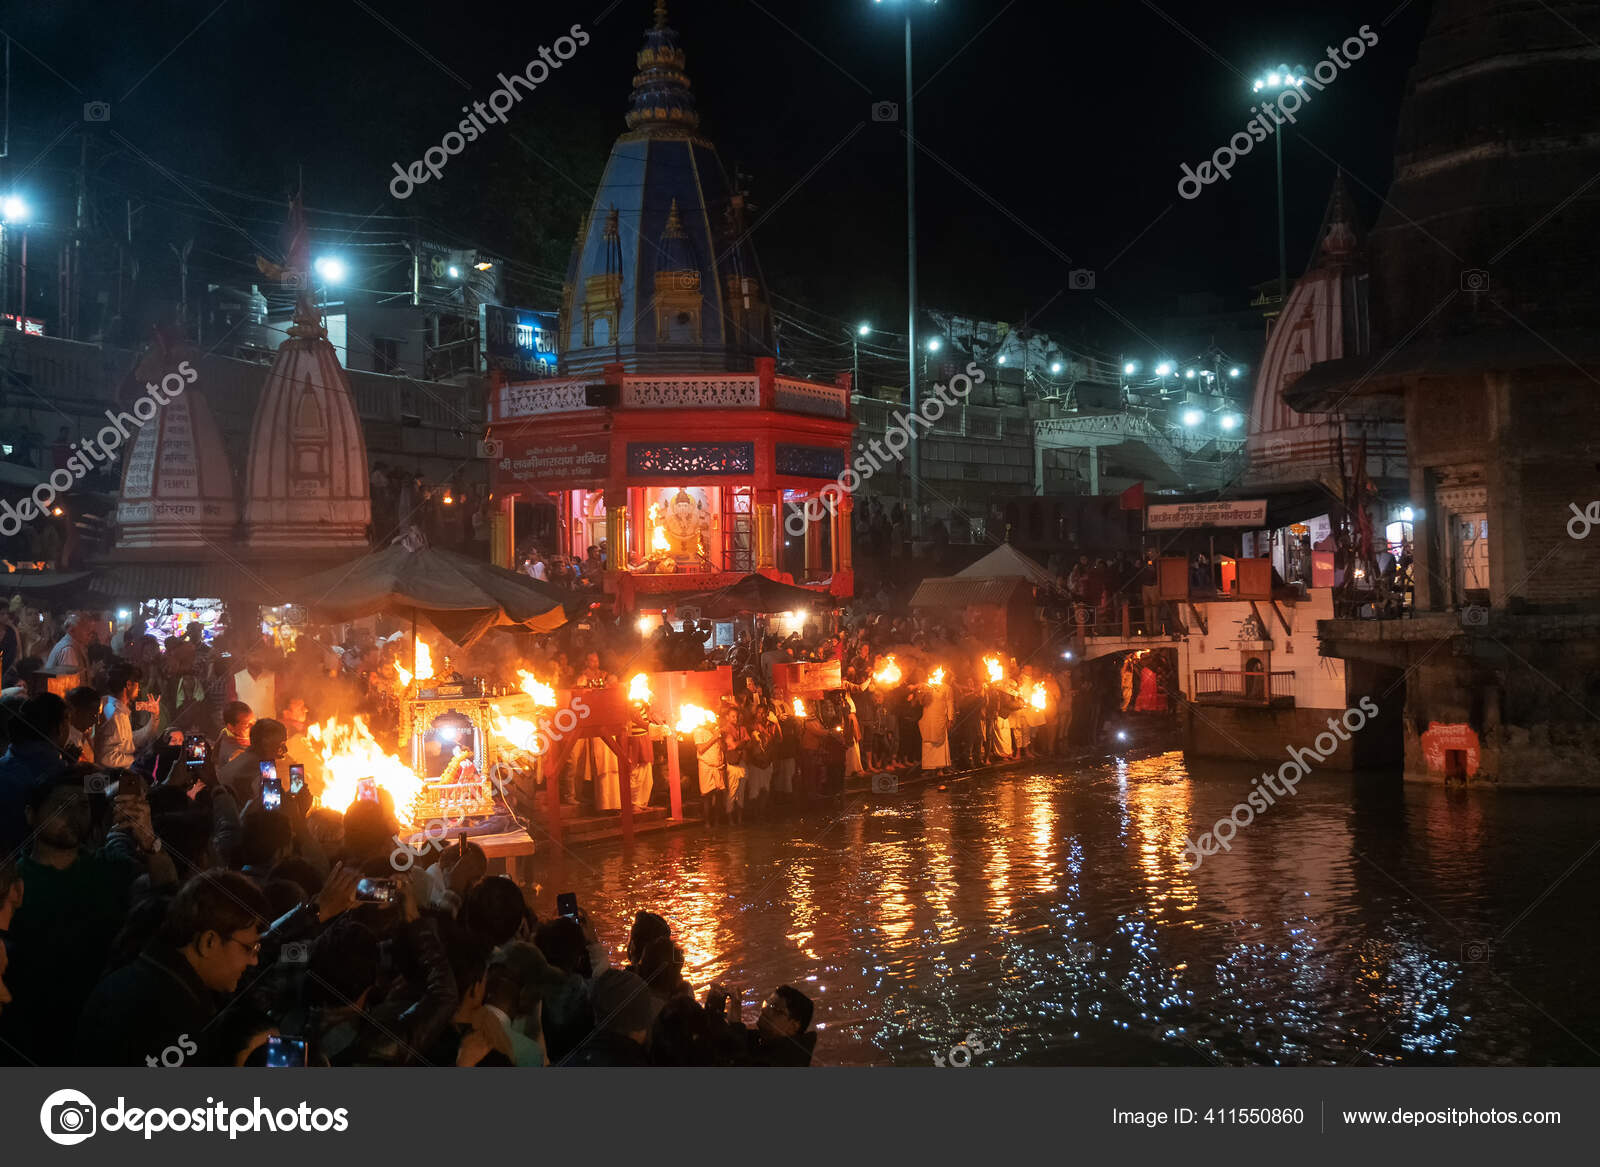 Ganga maa Stock Photos, Royalty Free Ganga maa Images | Depositphotos